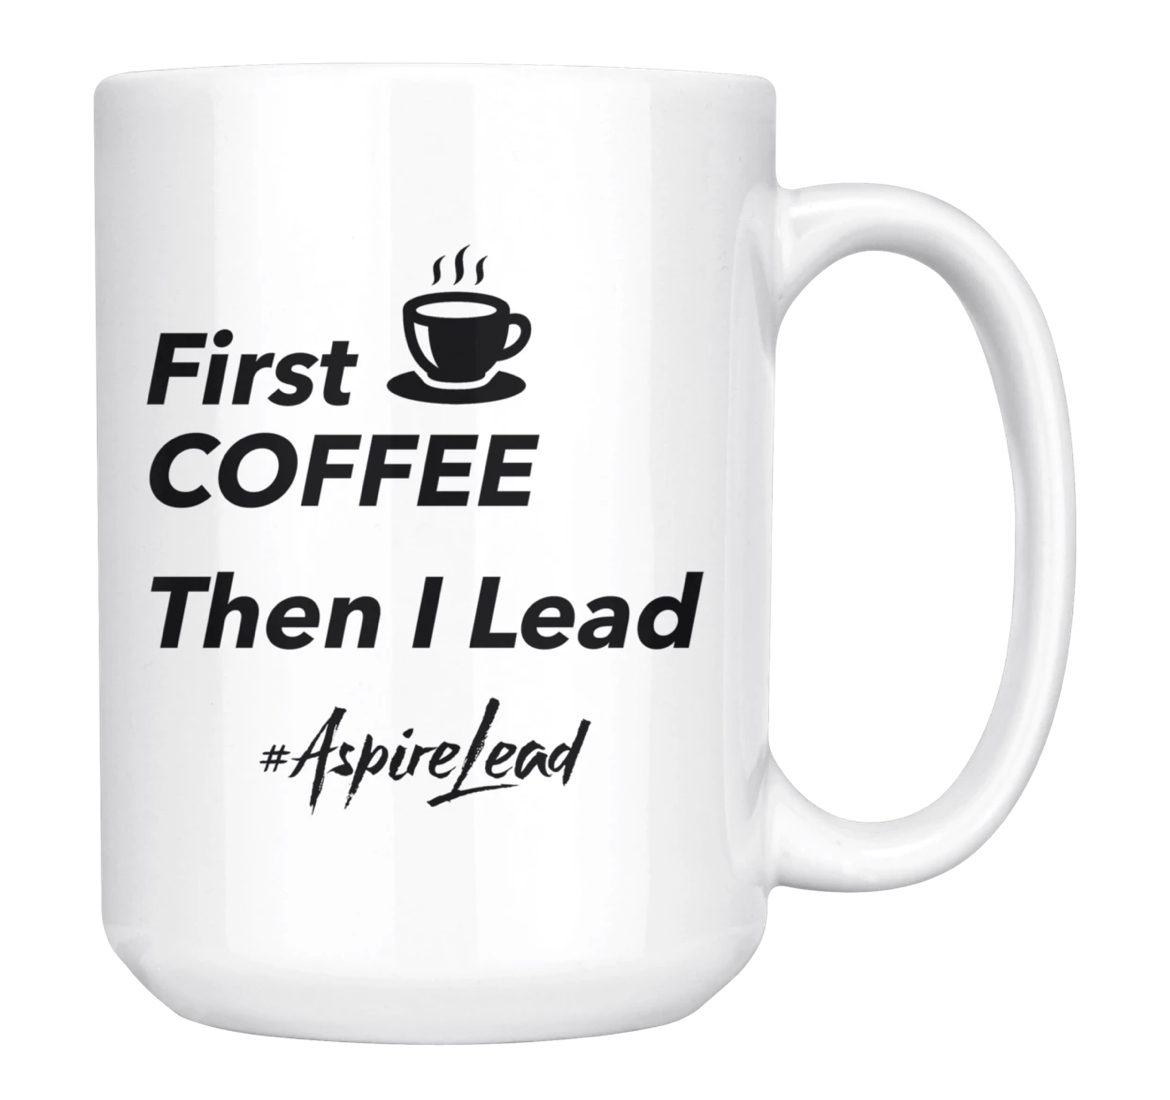 Aspire Coffee Mug, Joshua Stamper, #AspireLead, Teach Better Team